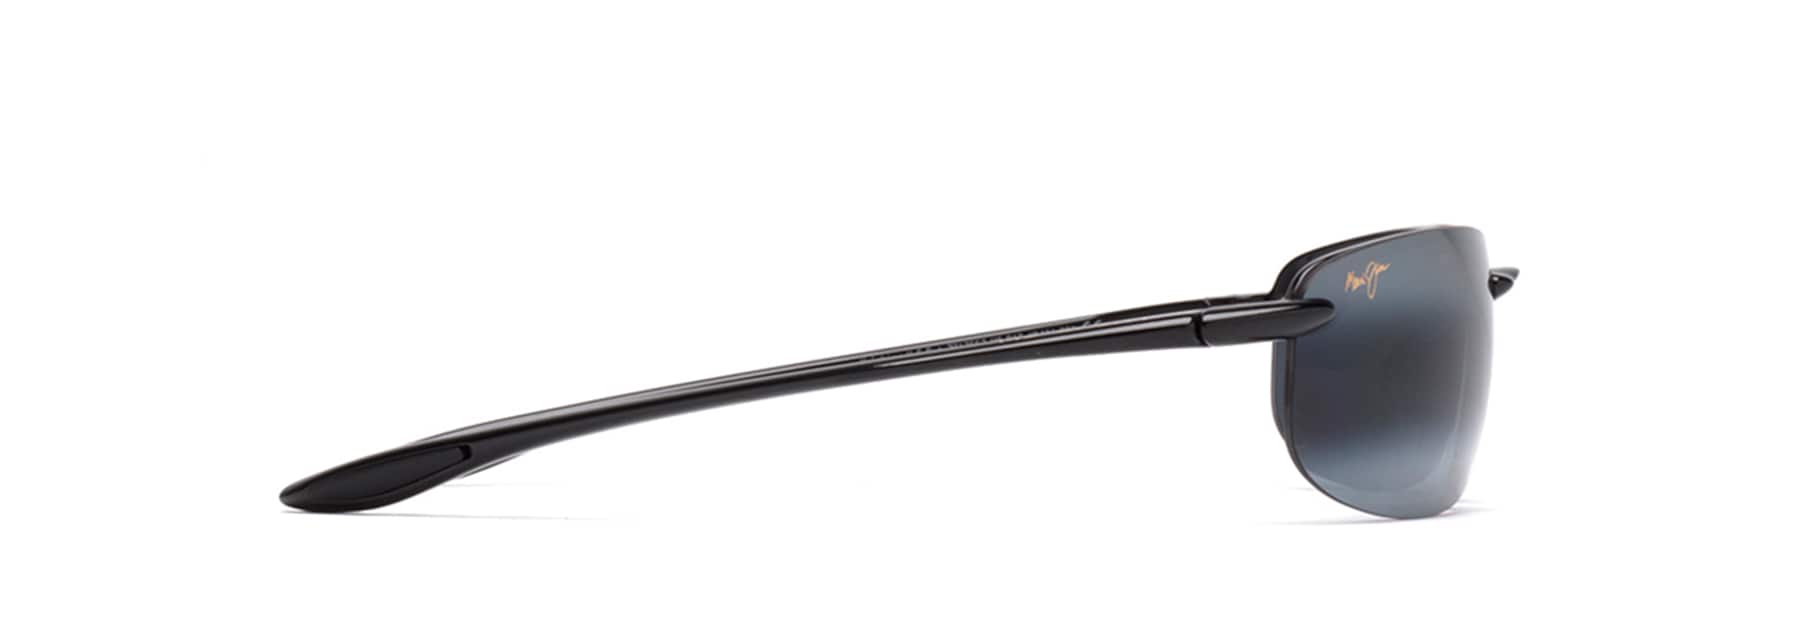 NEW MAUI JIM Black Sport Wrap Sunglasses Hookipa 407-02 Polarized Gray Lens Ital